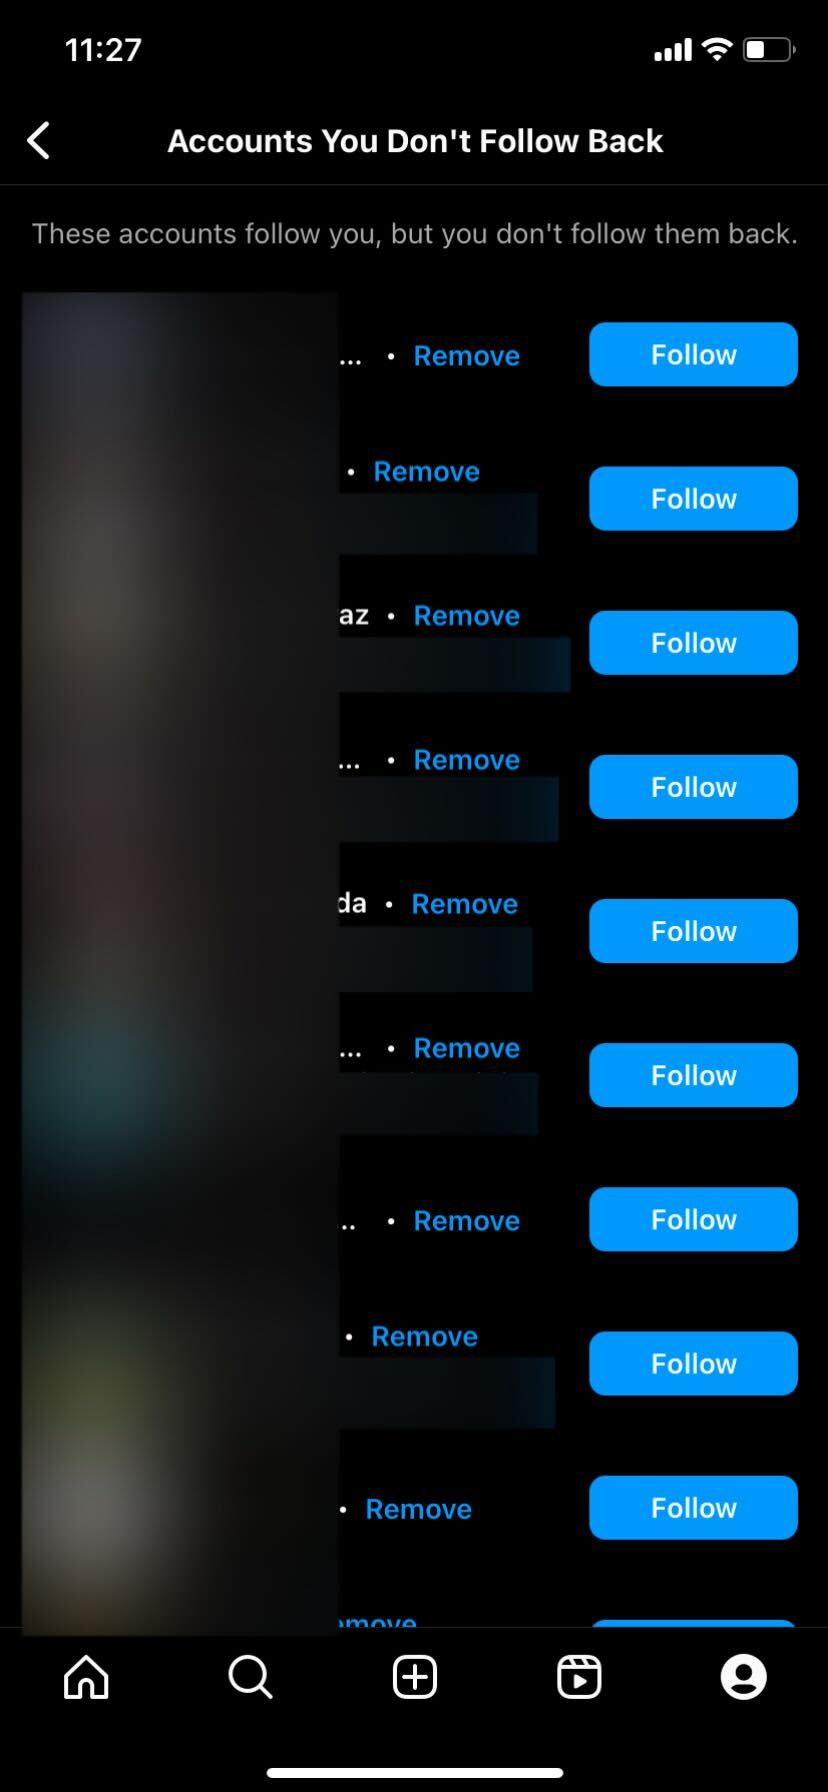 Instagram Accounts You Don’t Follow Back list